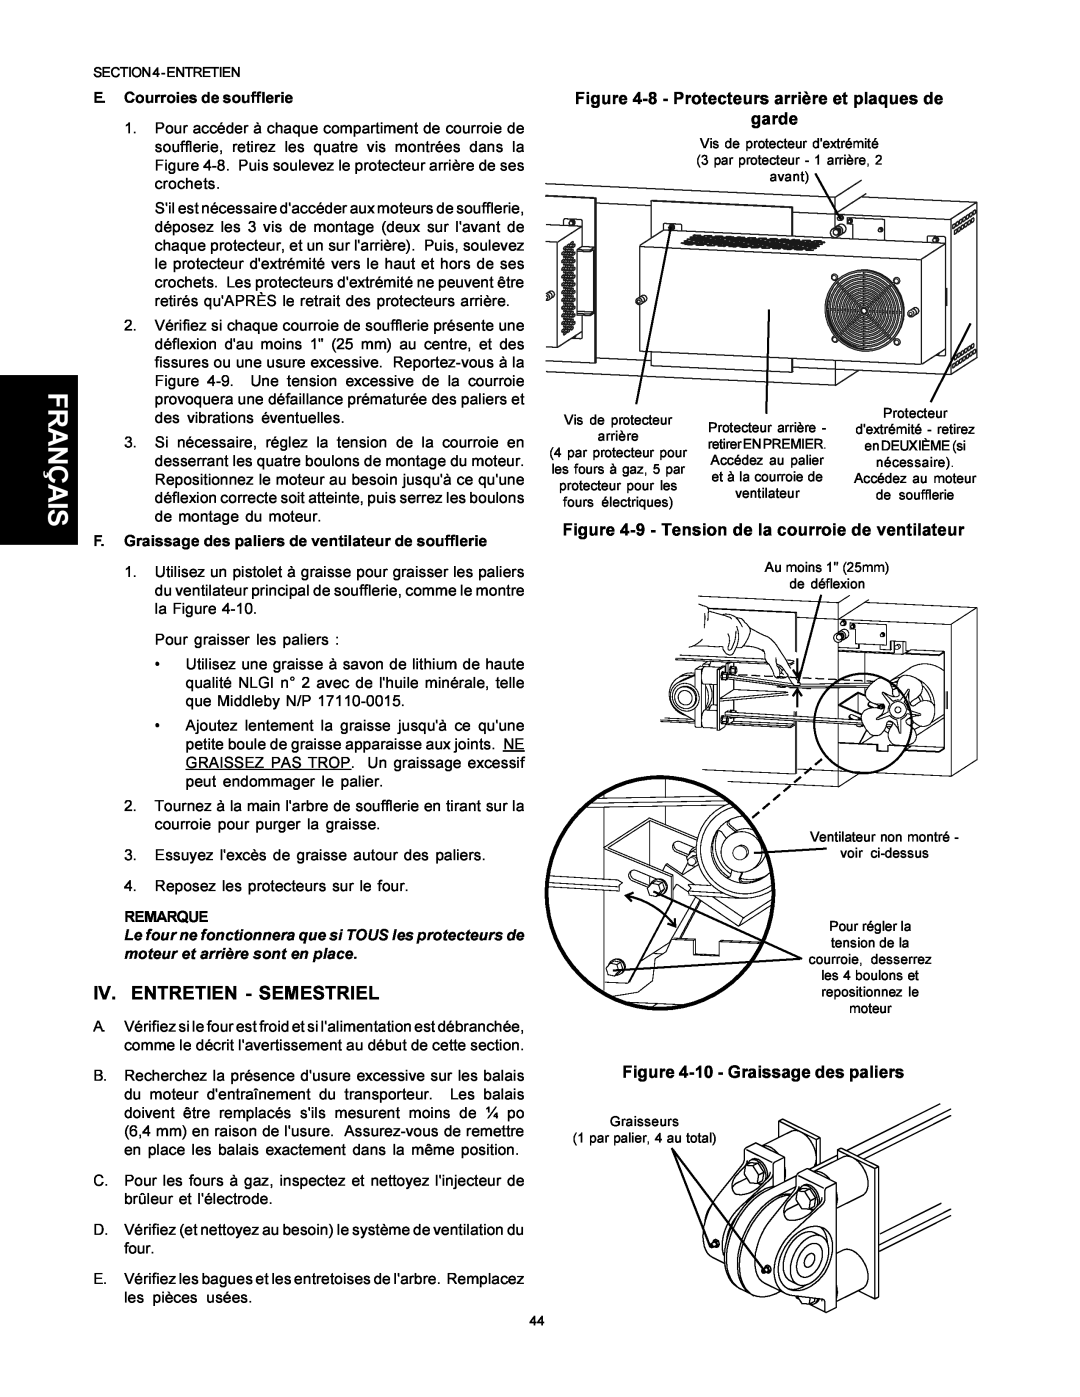 Middleby Marshall PS500 installation manual Iv. Entretien - Semestriel, Français, E. Courroies de soufflerie, Remarque 